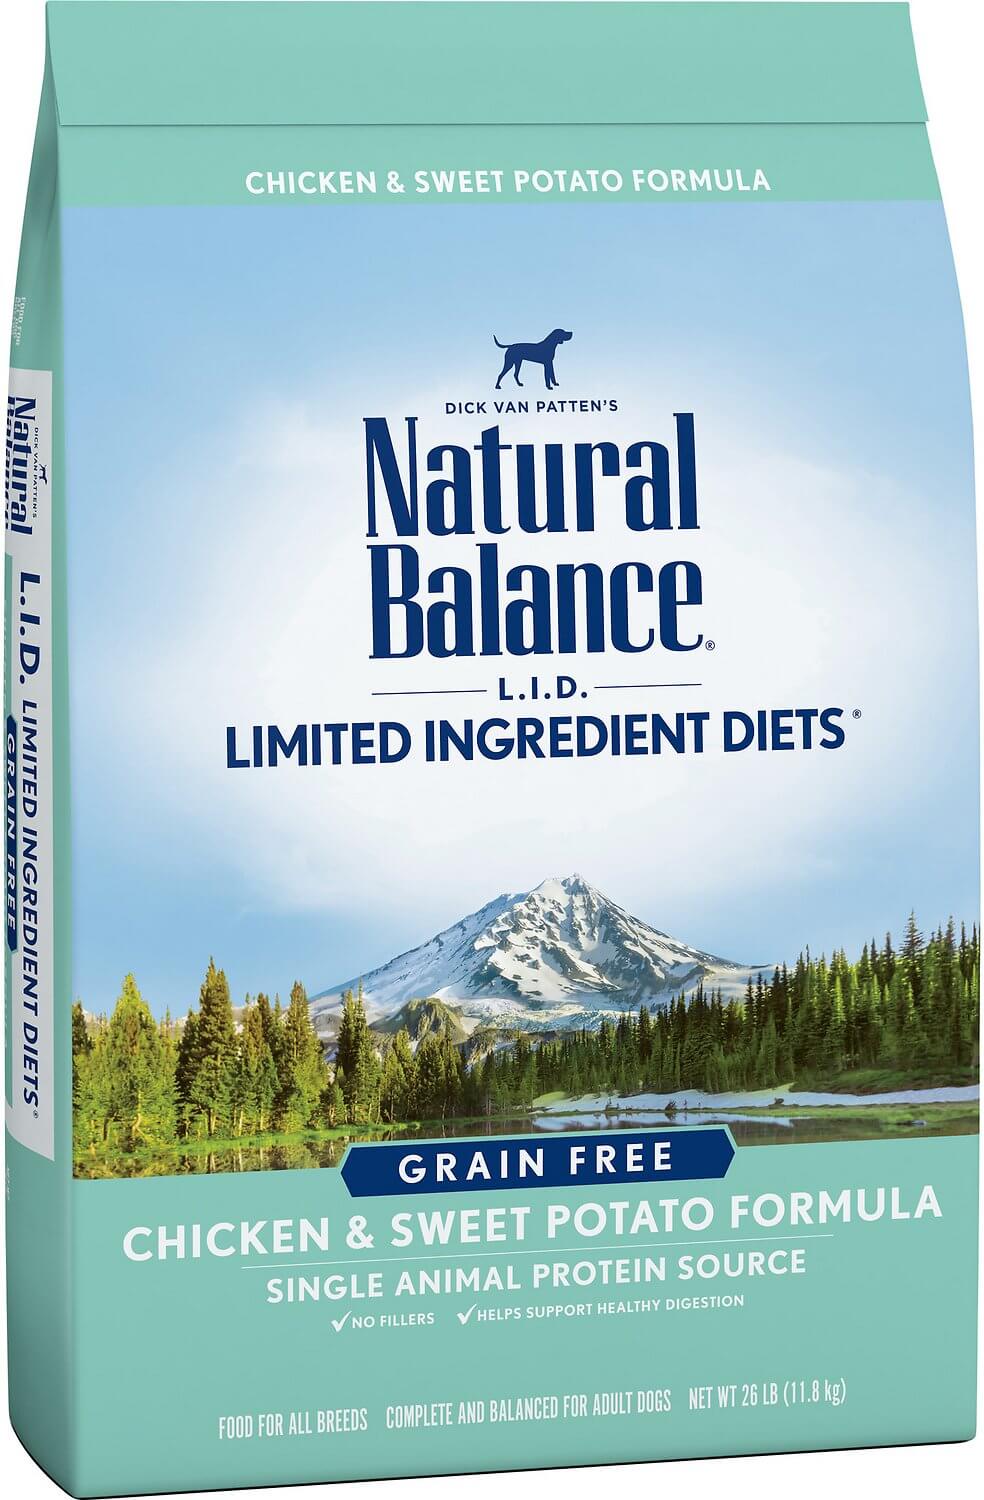 Natural Balance Dog Food | Review 